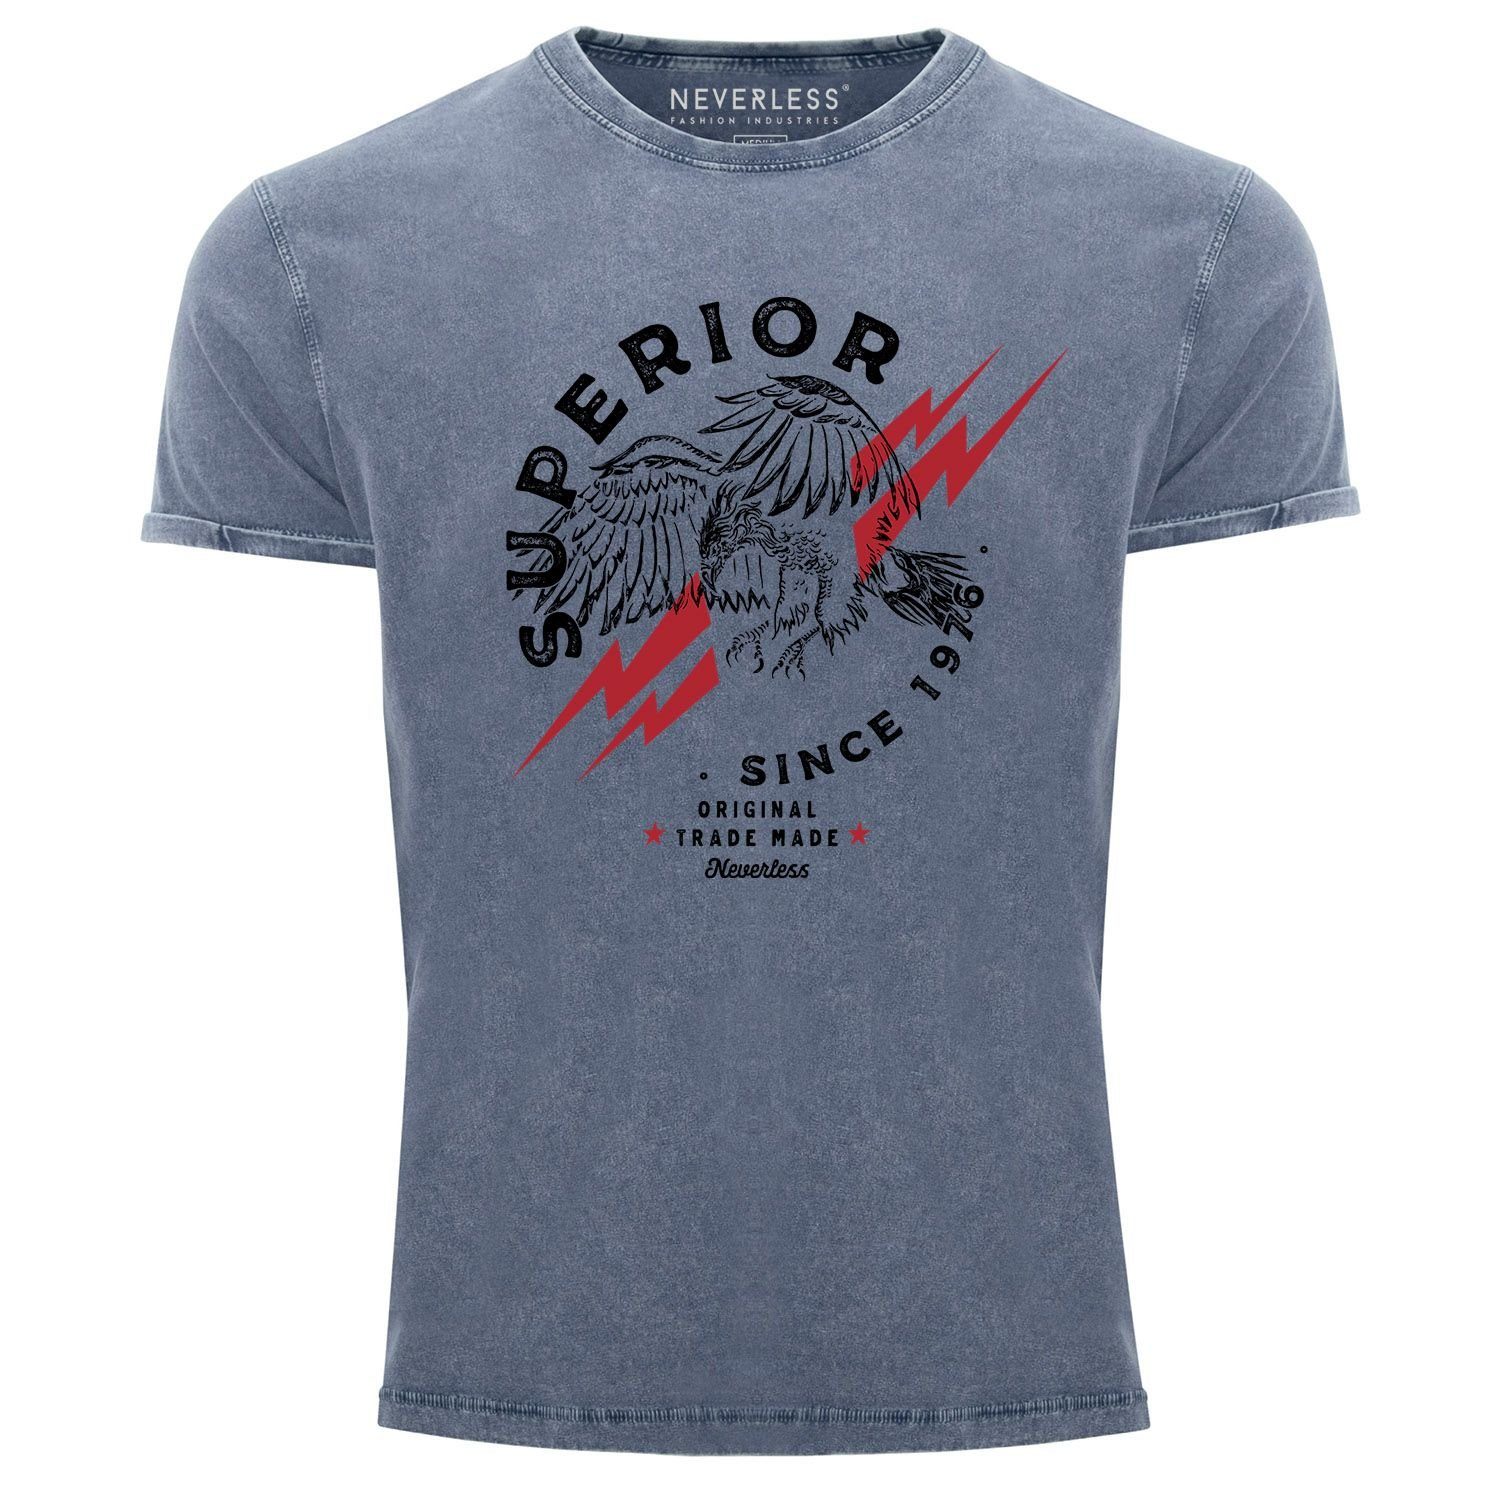 Neverless Print-Shirt Neverless® Herren T-Shirt Vintage Shirt Printshirt Superior Eagle Since 1976 Aufdruck Adler Print Used Look Slim Fit mit Print blau